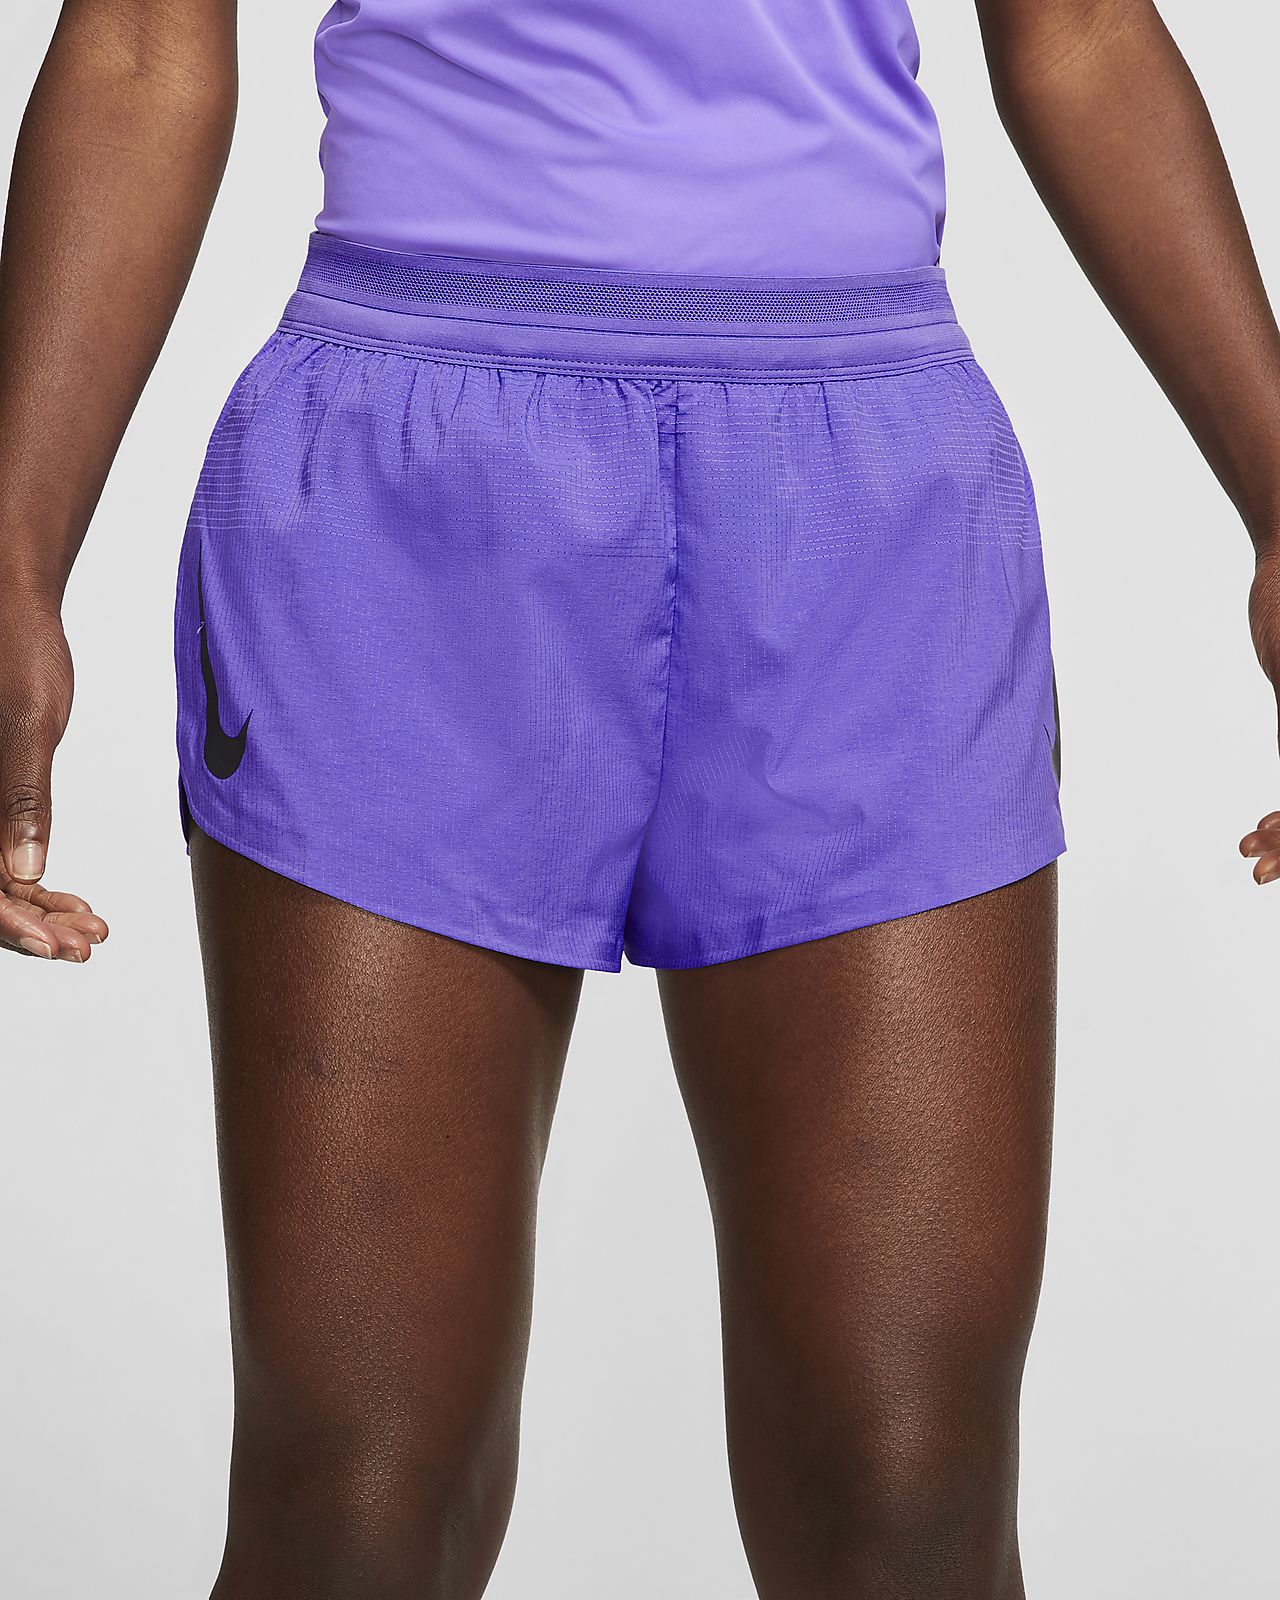 purple nike shorts